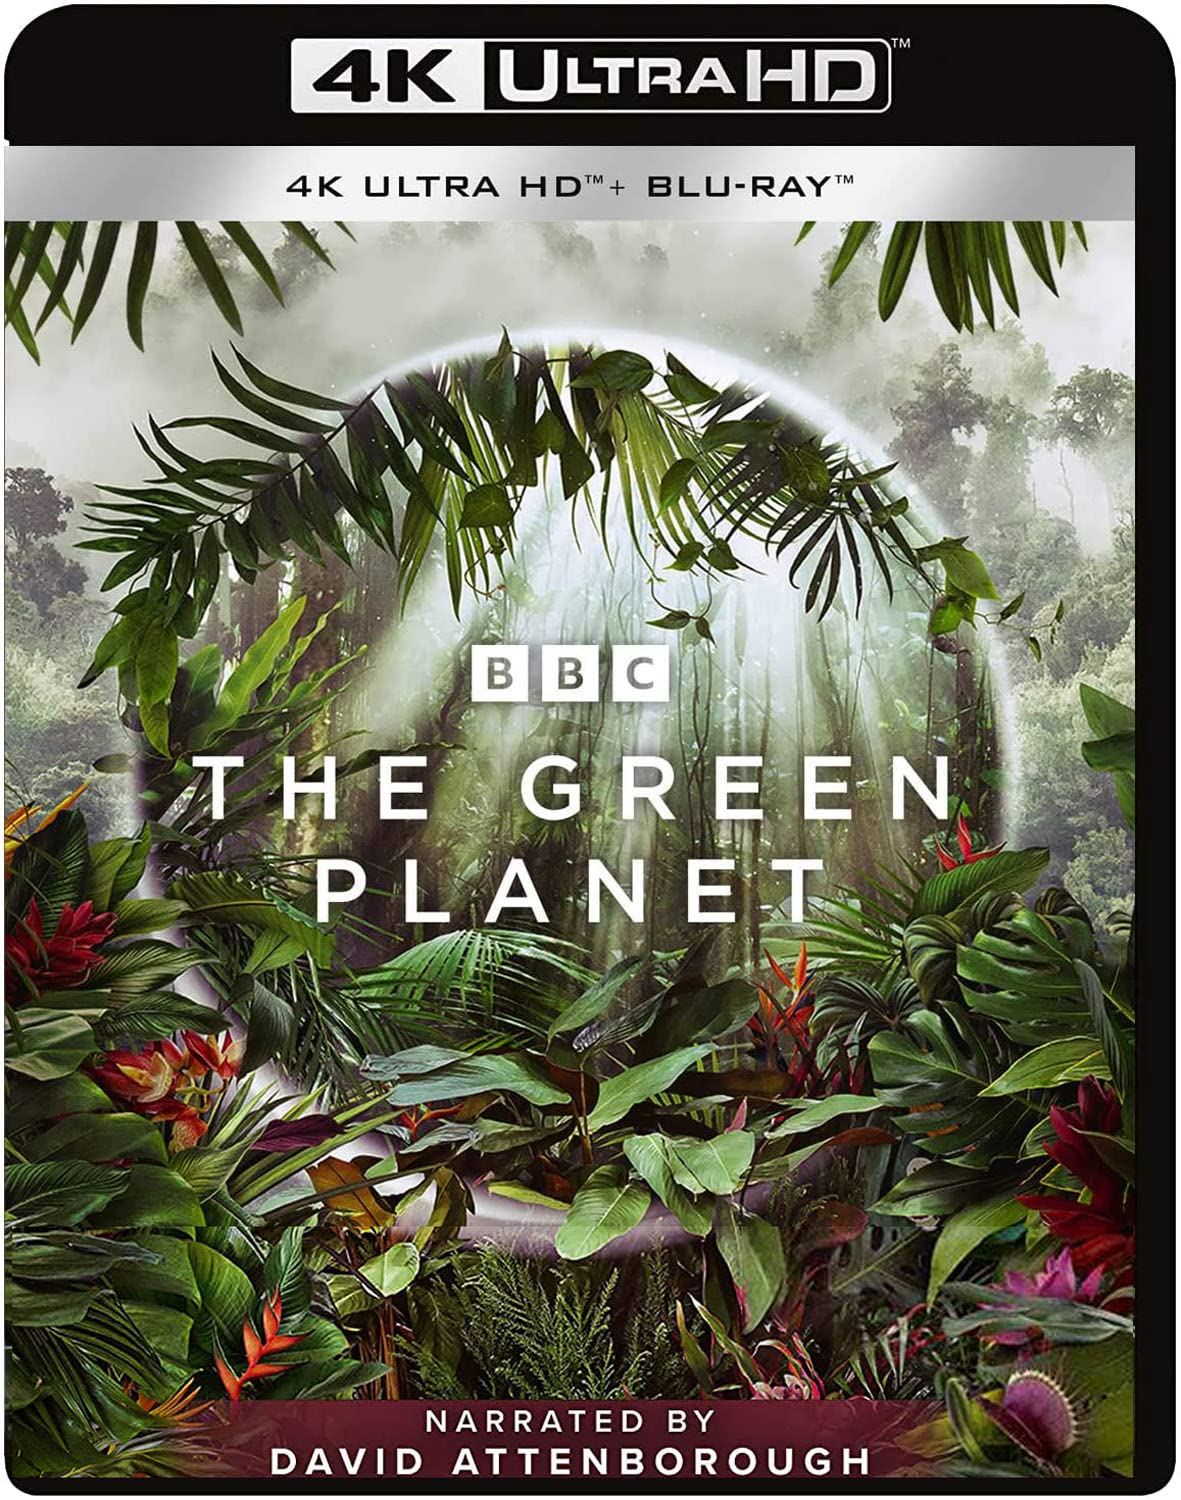 BBC Earth: The Green Planet Narrated by Sir David Attenborough (4K UHD + Blu-ray) $16.99 @ Amazon